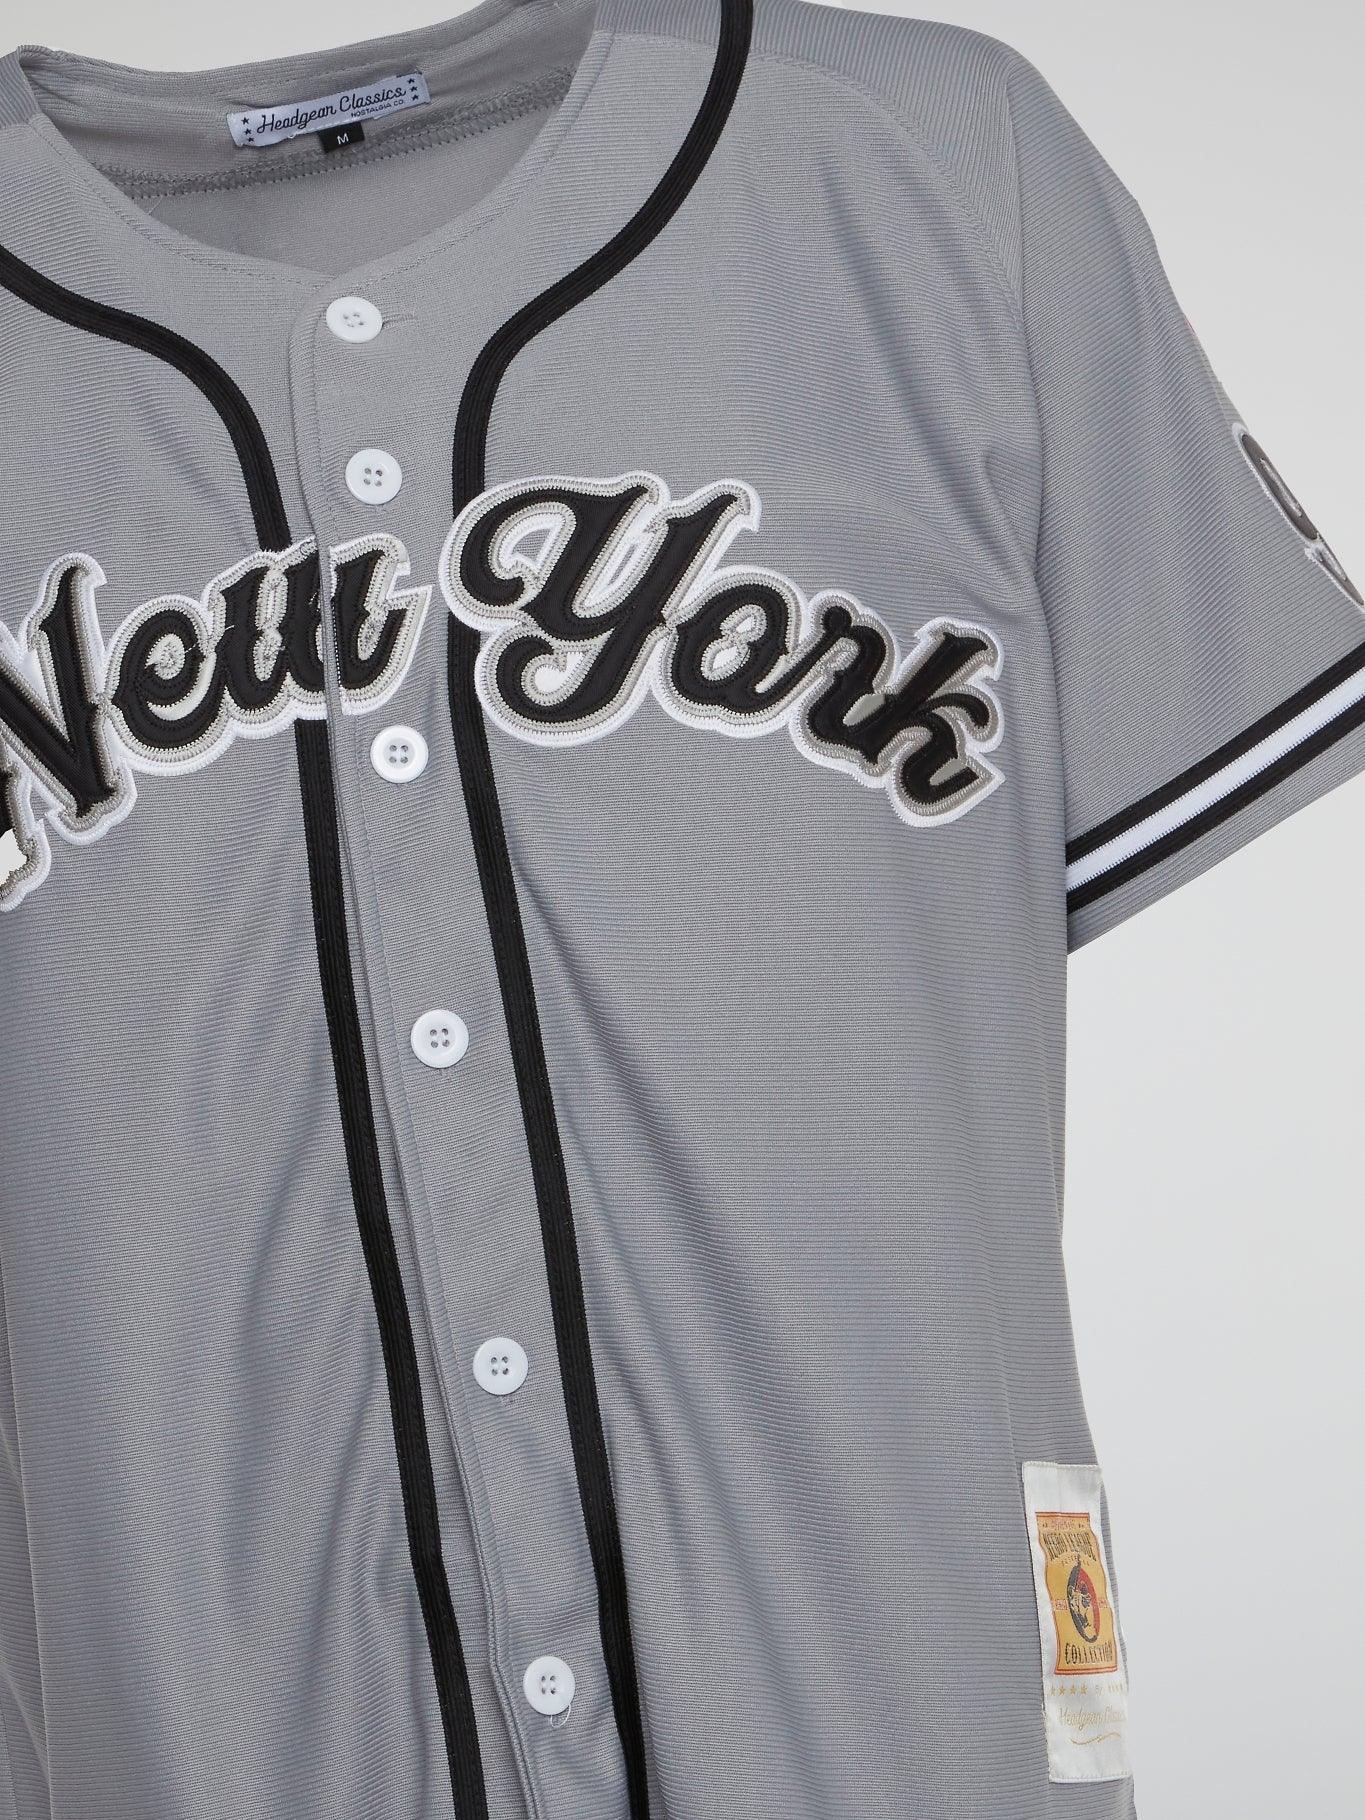 Black Yankees Baseball Jersey - B-Hype Society